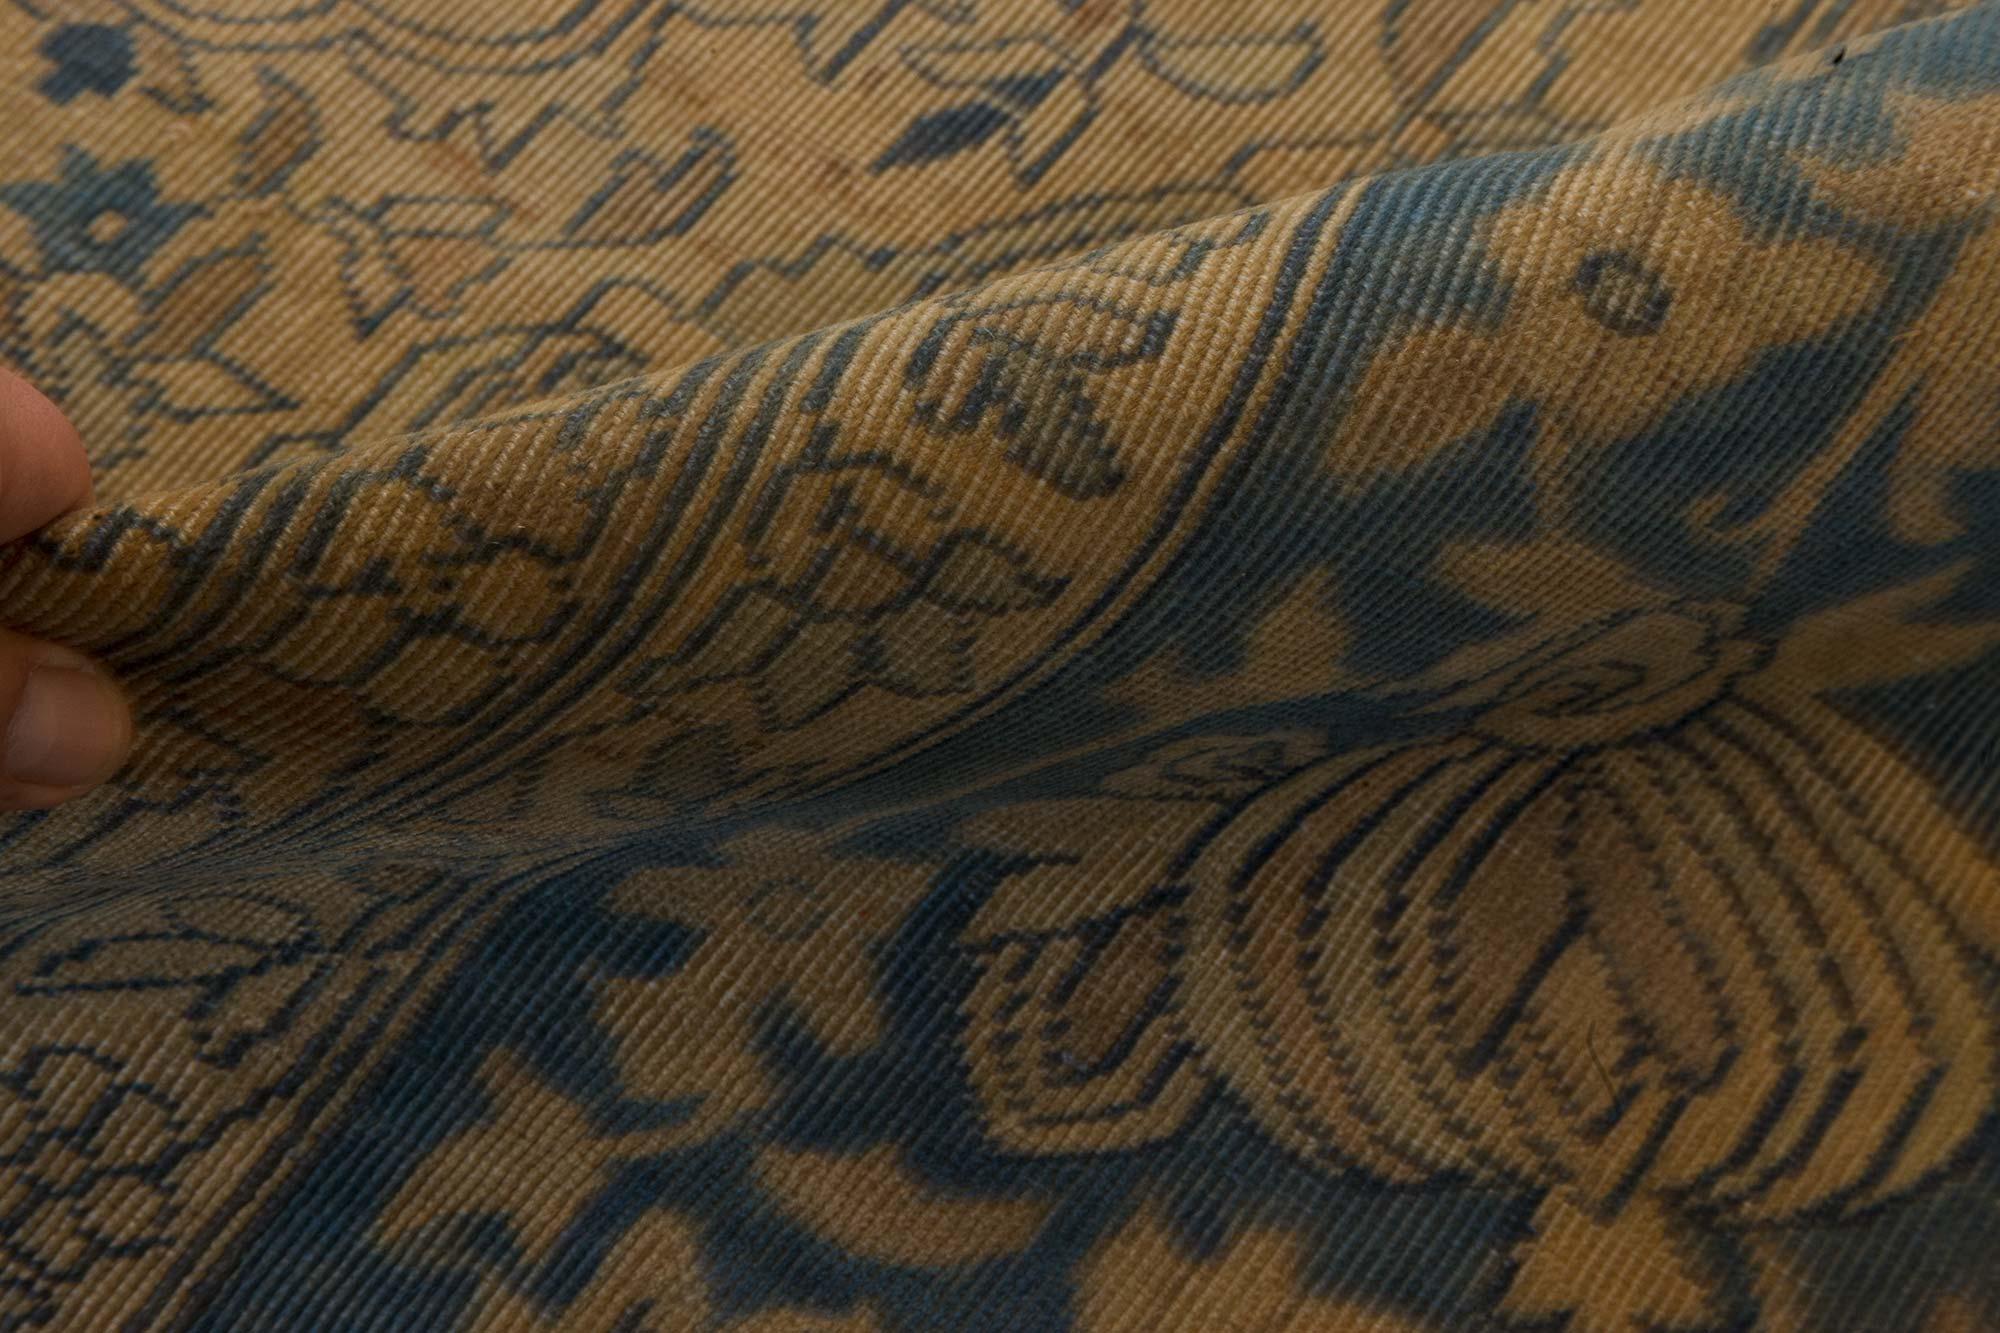 Authentic 19th Century Persian Tabriz Beige, Brown, Blue Handmade Wool Carpet
Size: 9'8